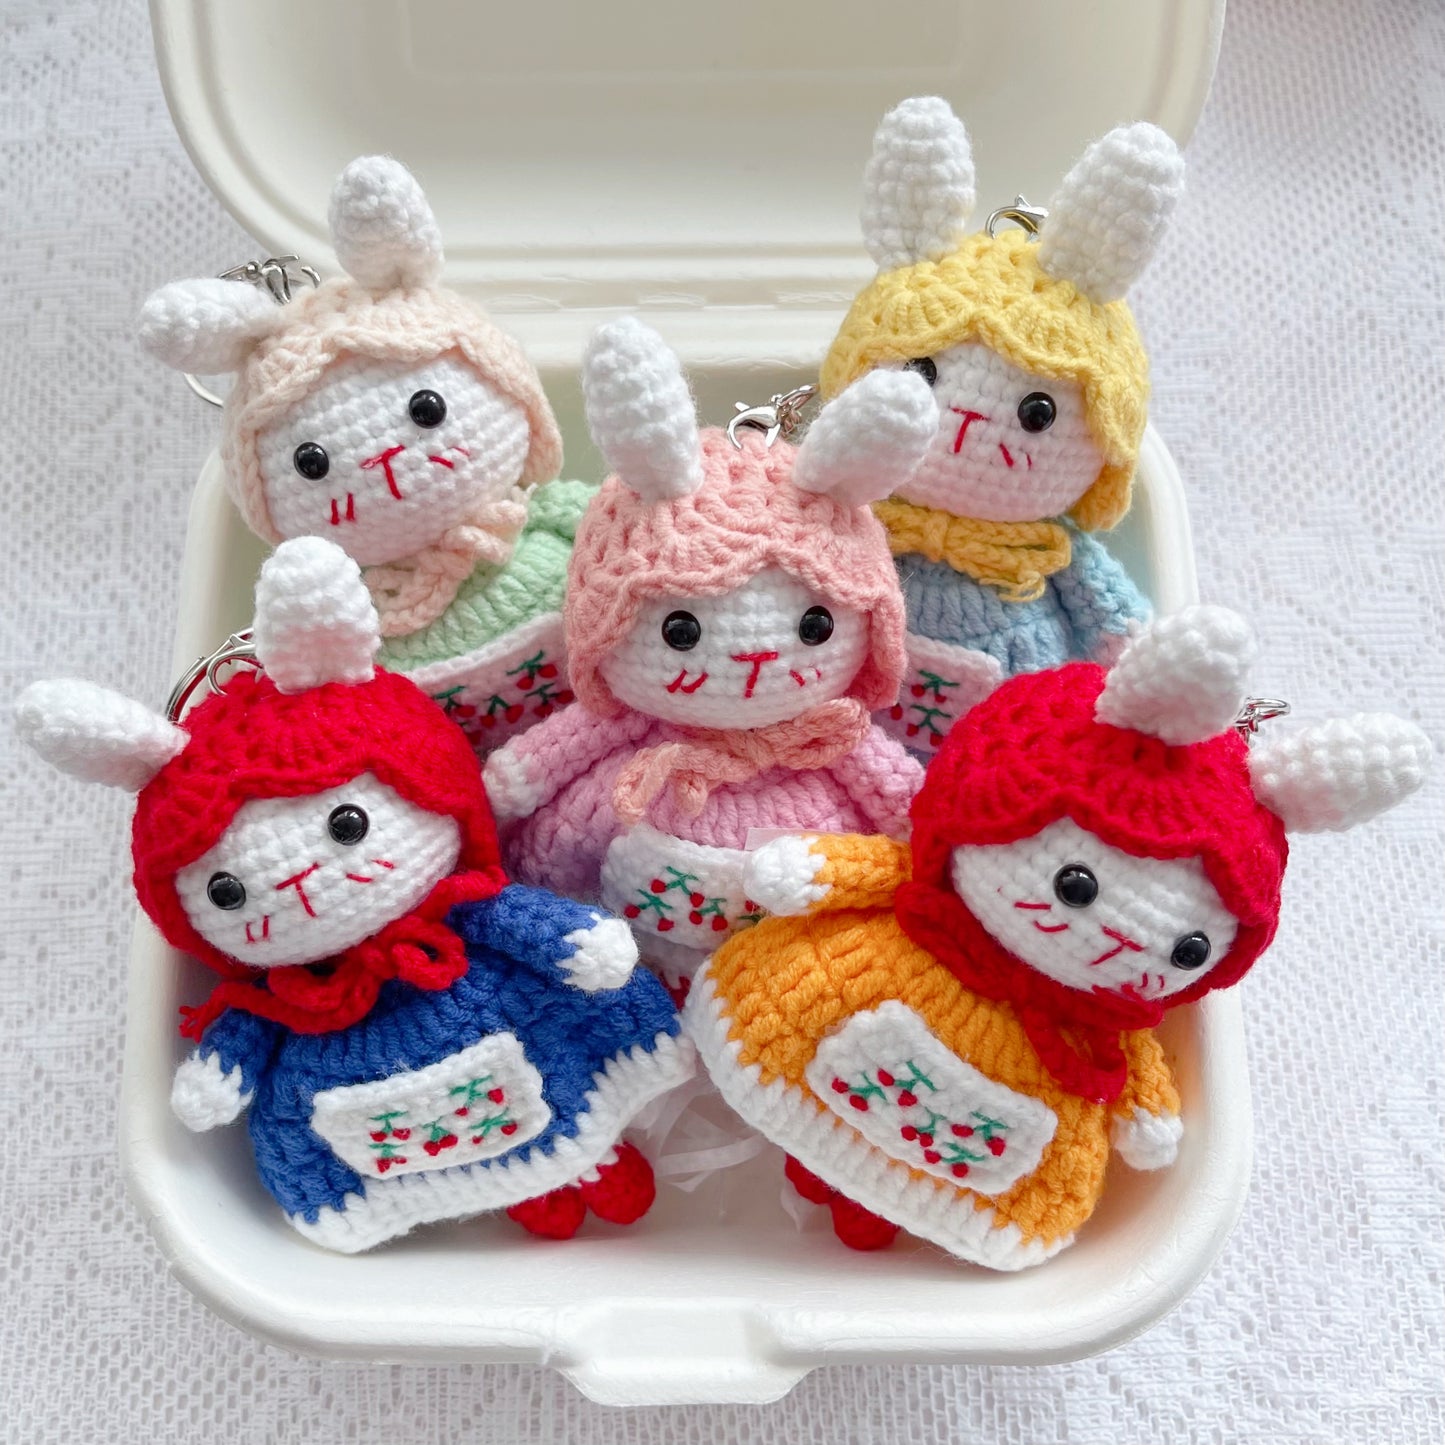 crochet dressed up bunnies keychain ໒꒰ྀིっ˕ -｡꒱ྀི১🌈